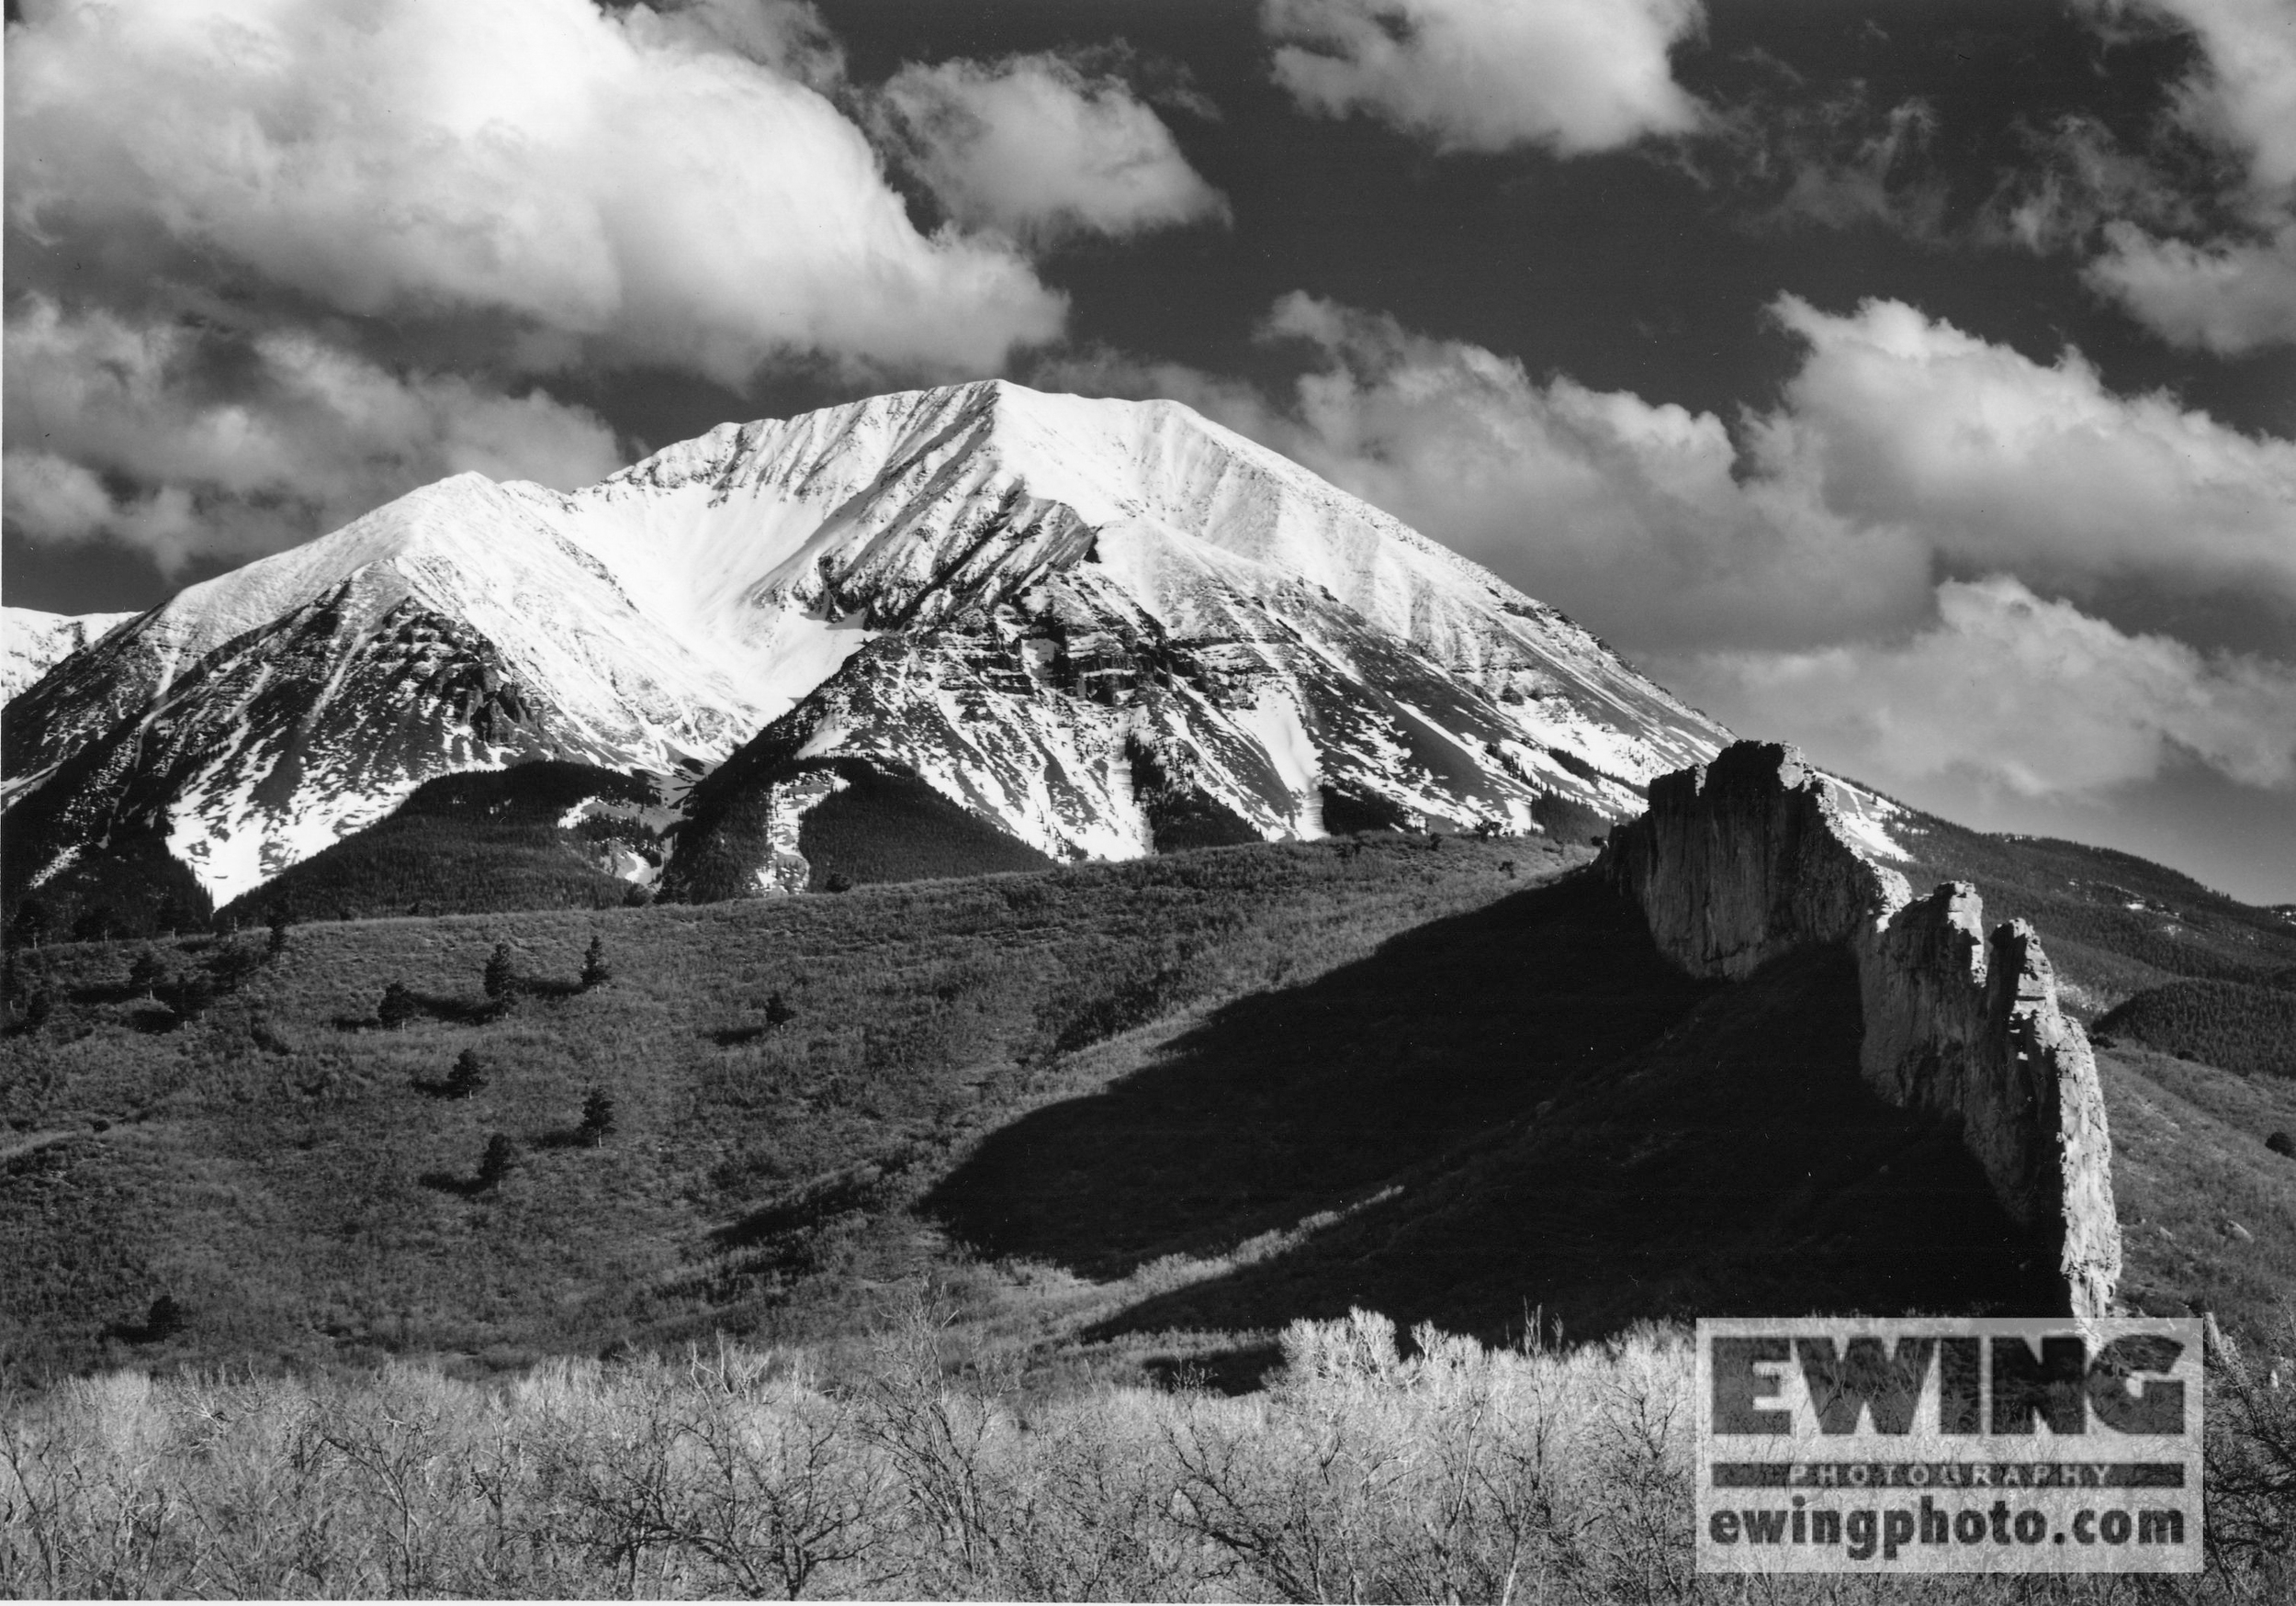 West Spanish Peak with Dikes, La Veta Colorado